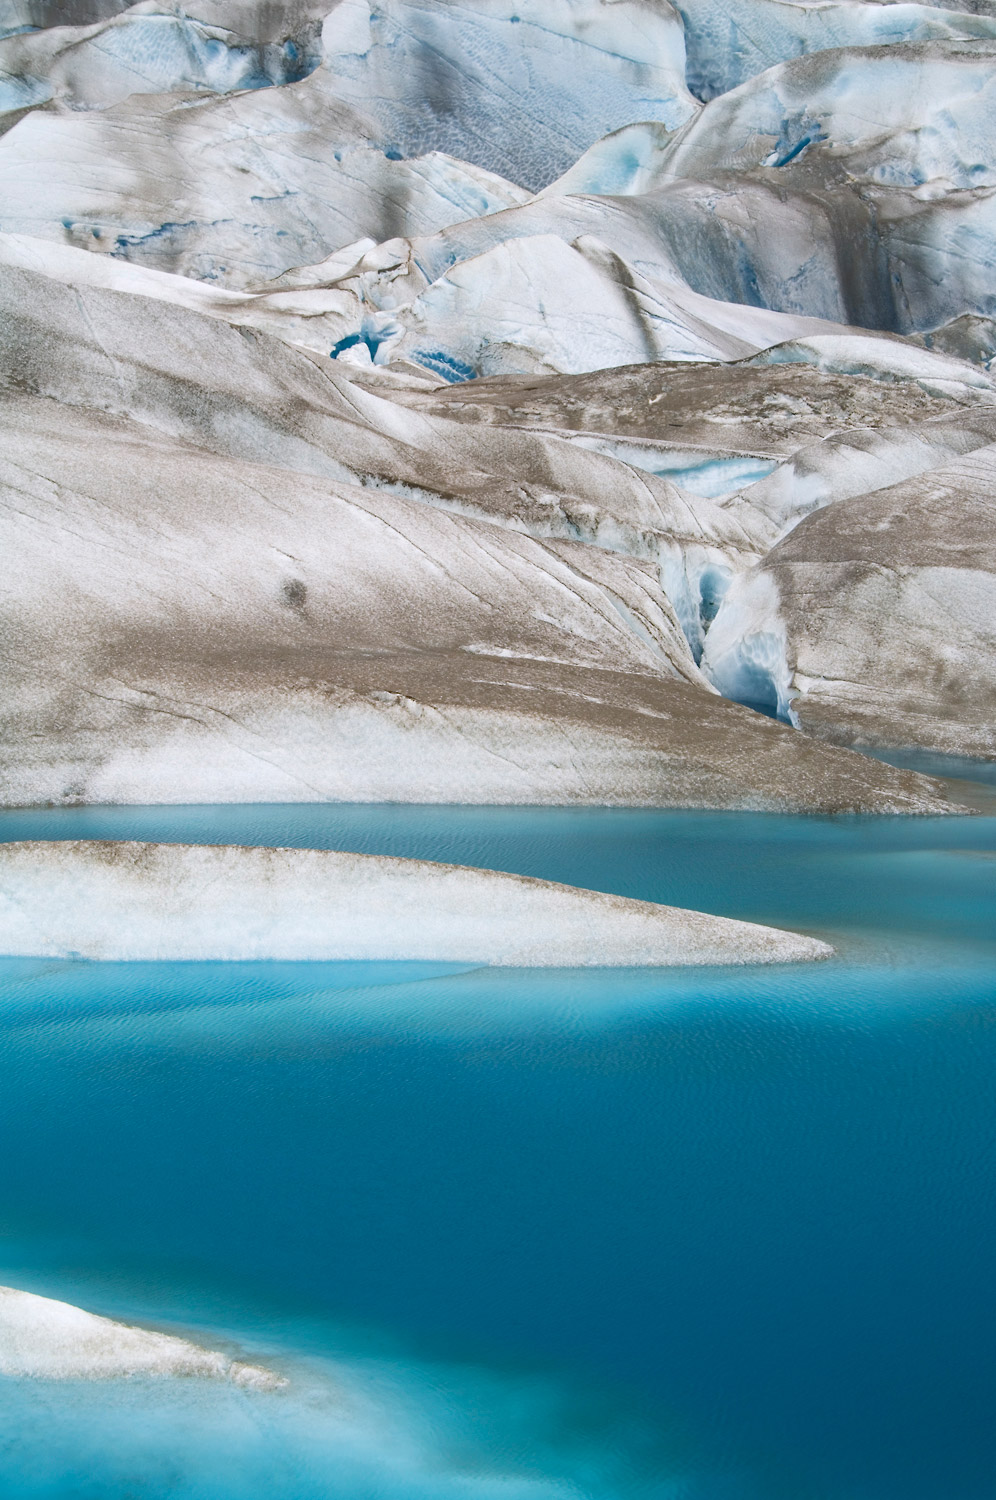 A deep blue tarn, or lake, on Tana Glacier, near Thompson Ridge, Wrangell-St. Elias National Park, Alaska.